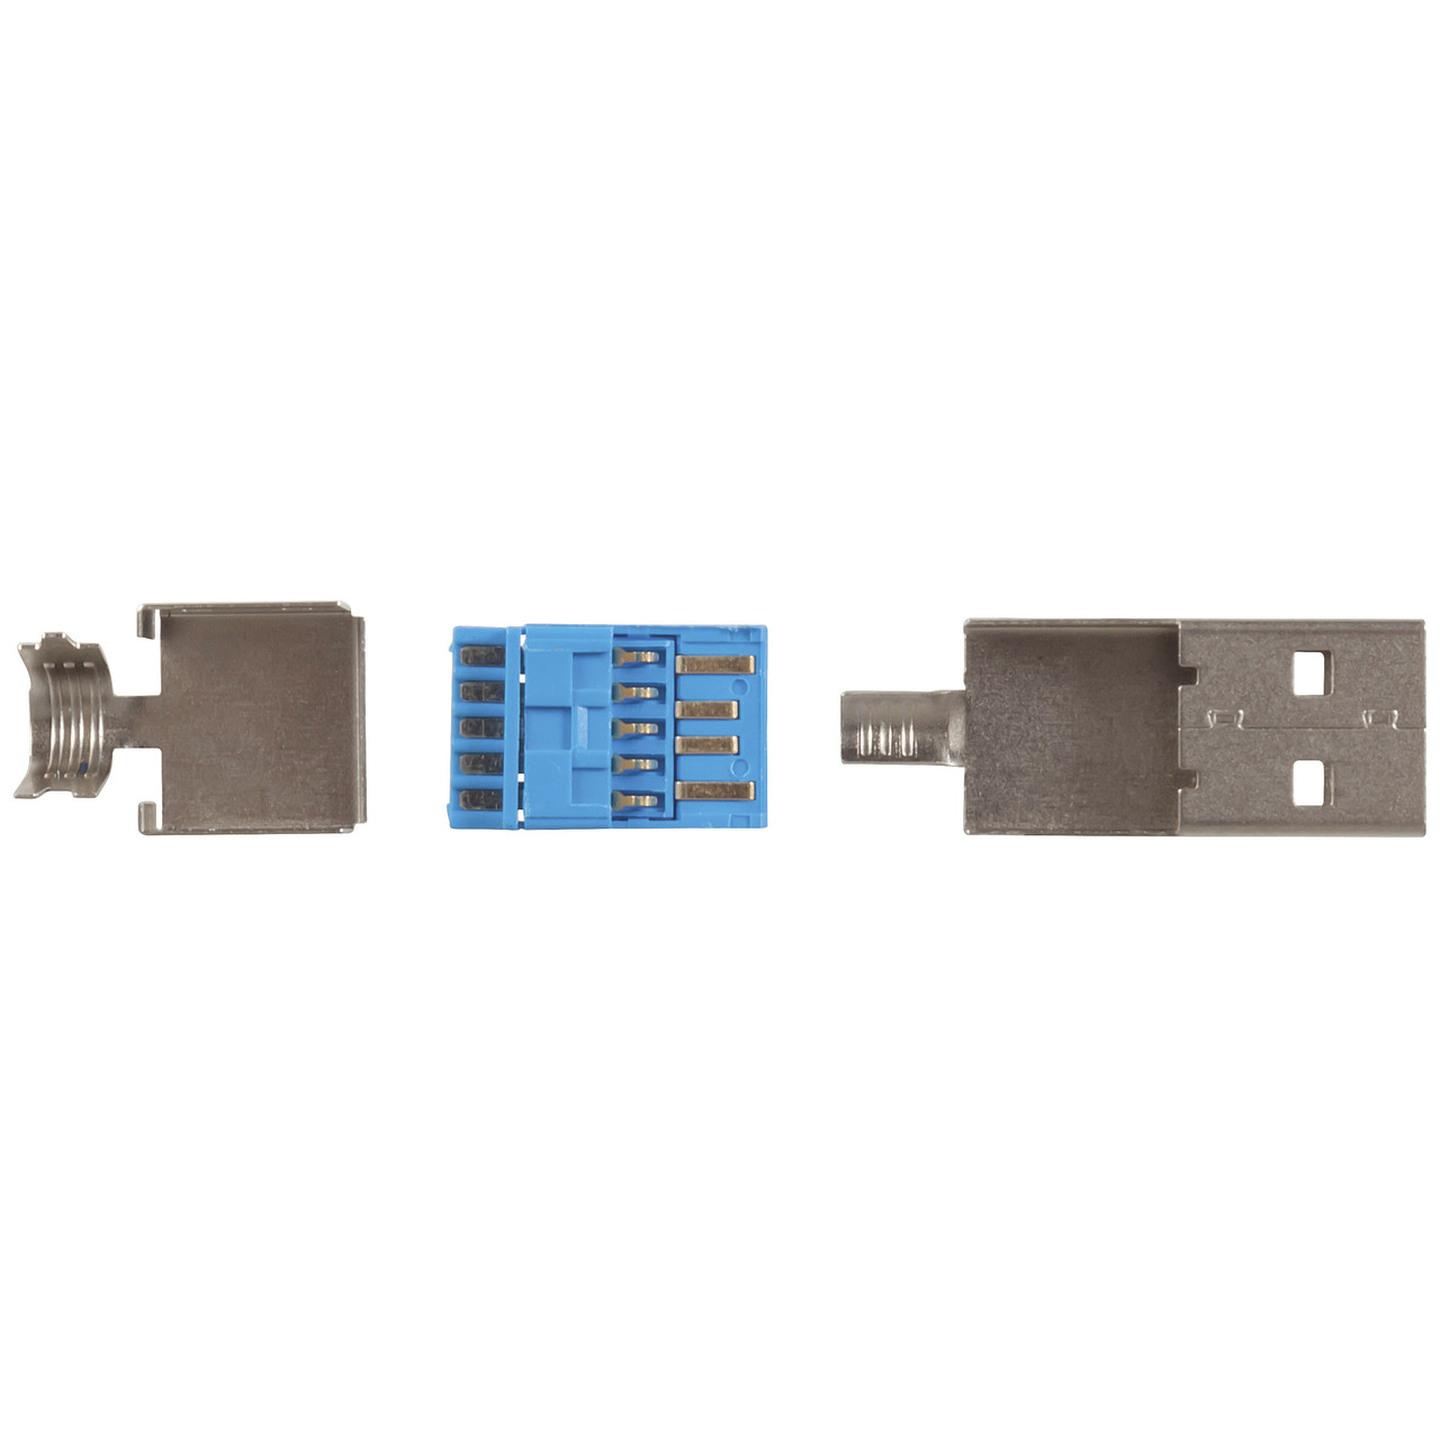 USB 3.0 Type A Plug